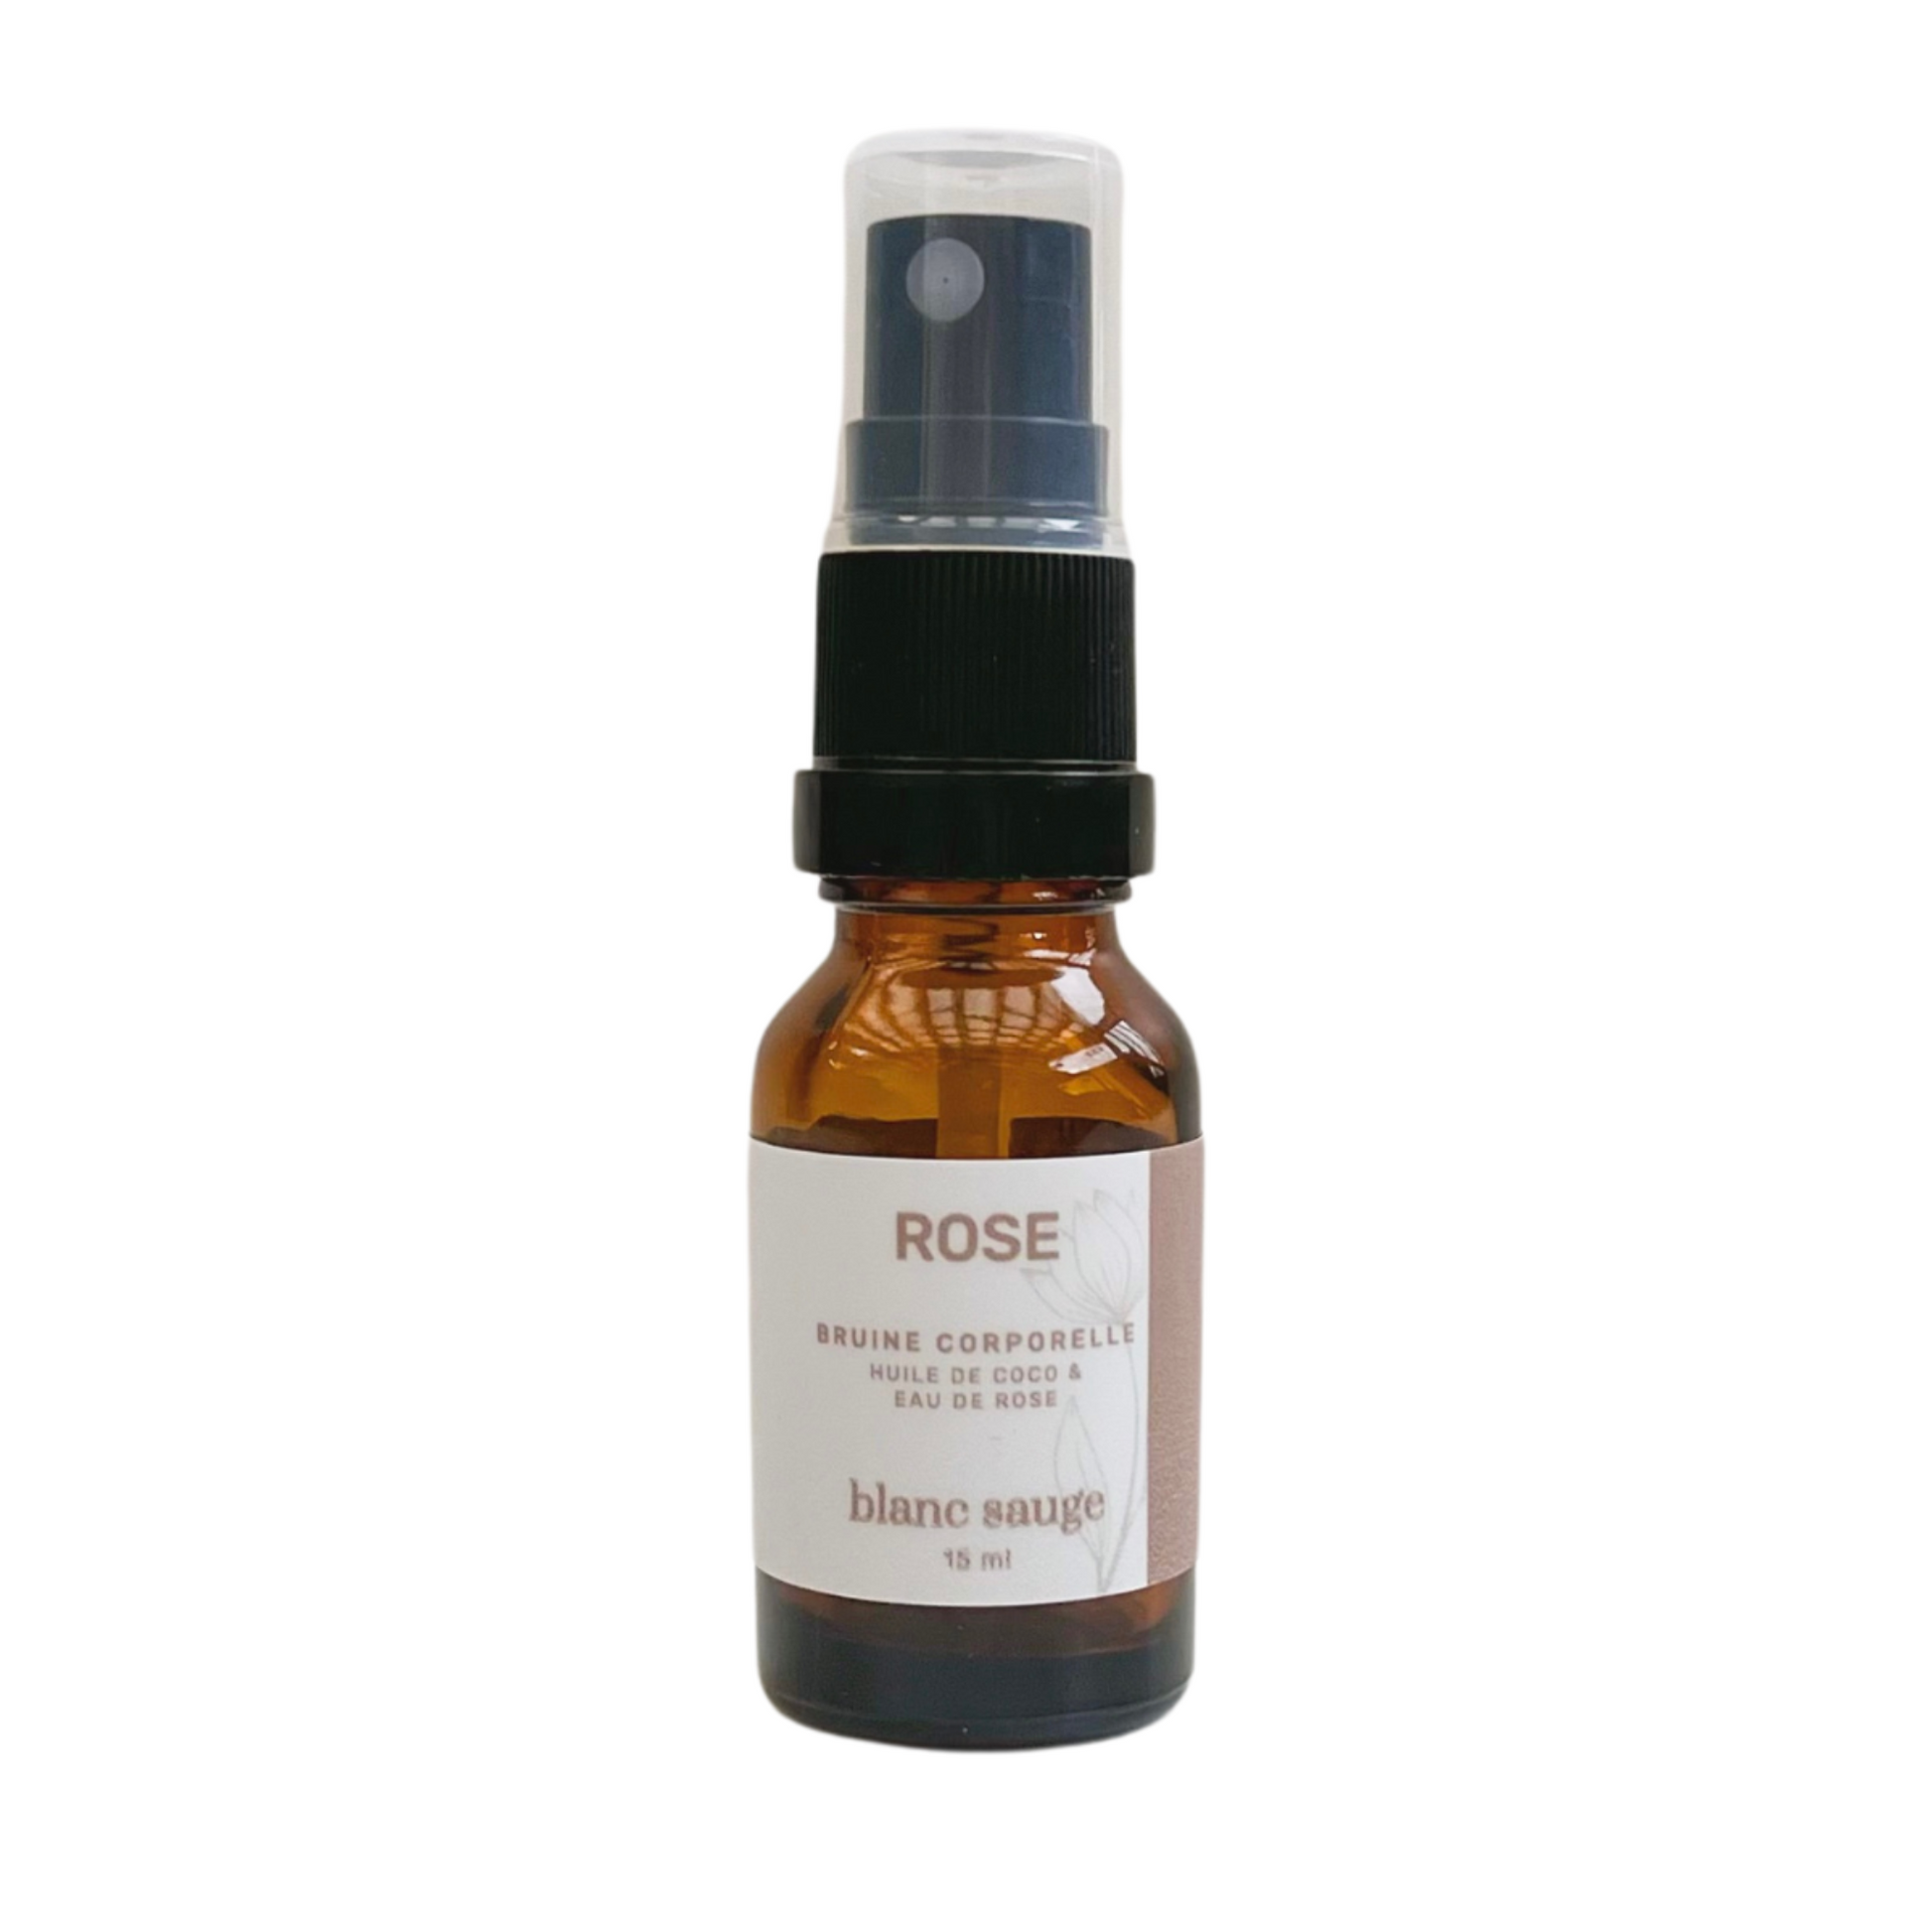 Bruine Corporelle Rose | mini format | blanc sauge